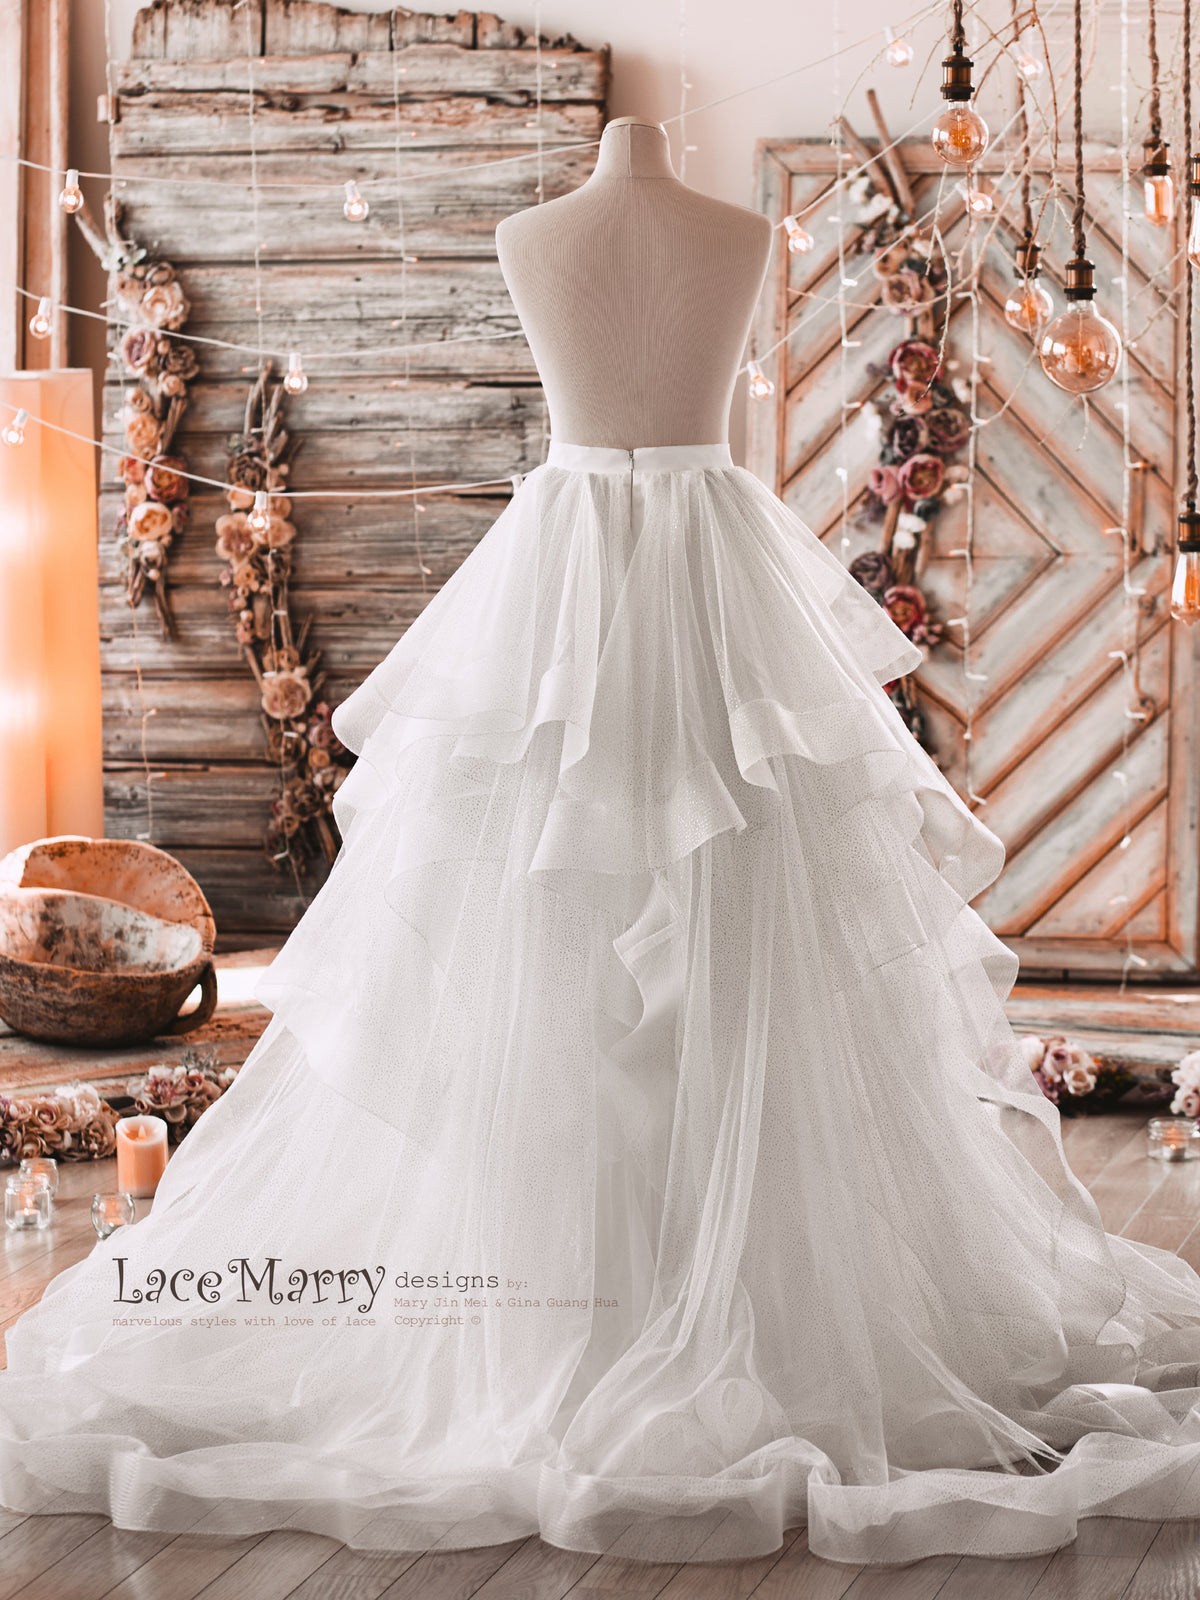 Sparkling Bridal Skirt in A Line Shape